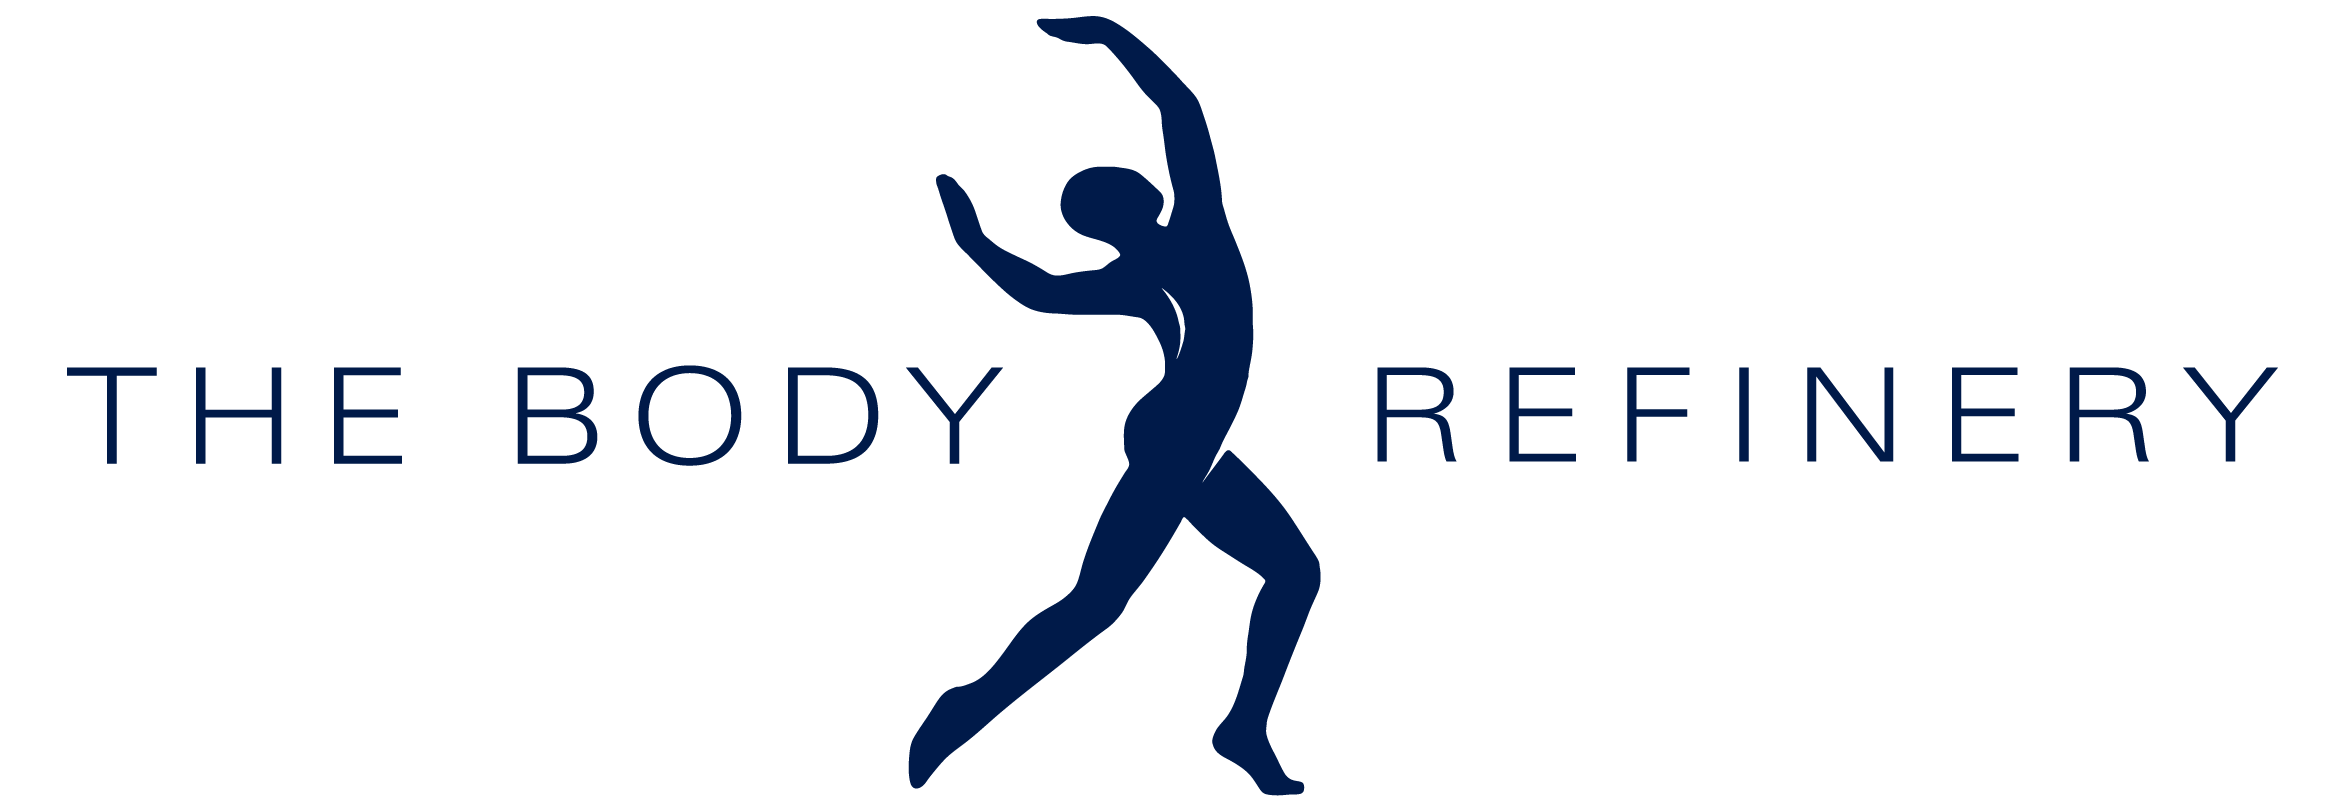 The Body Refinery Logo